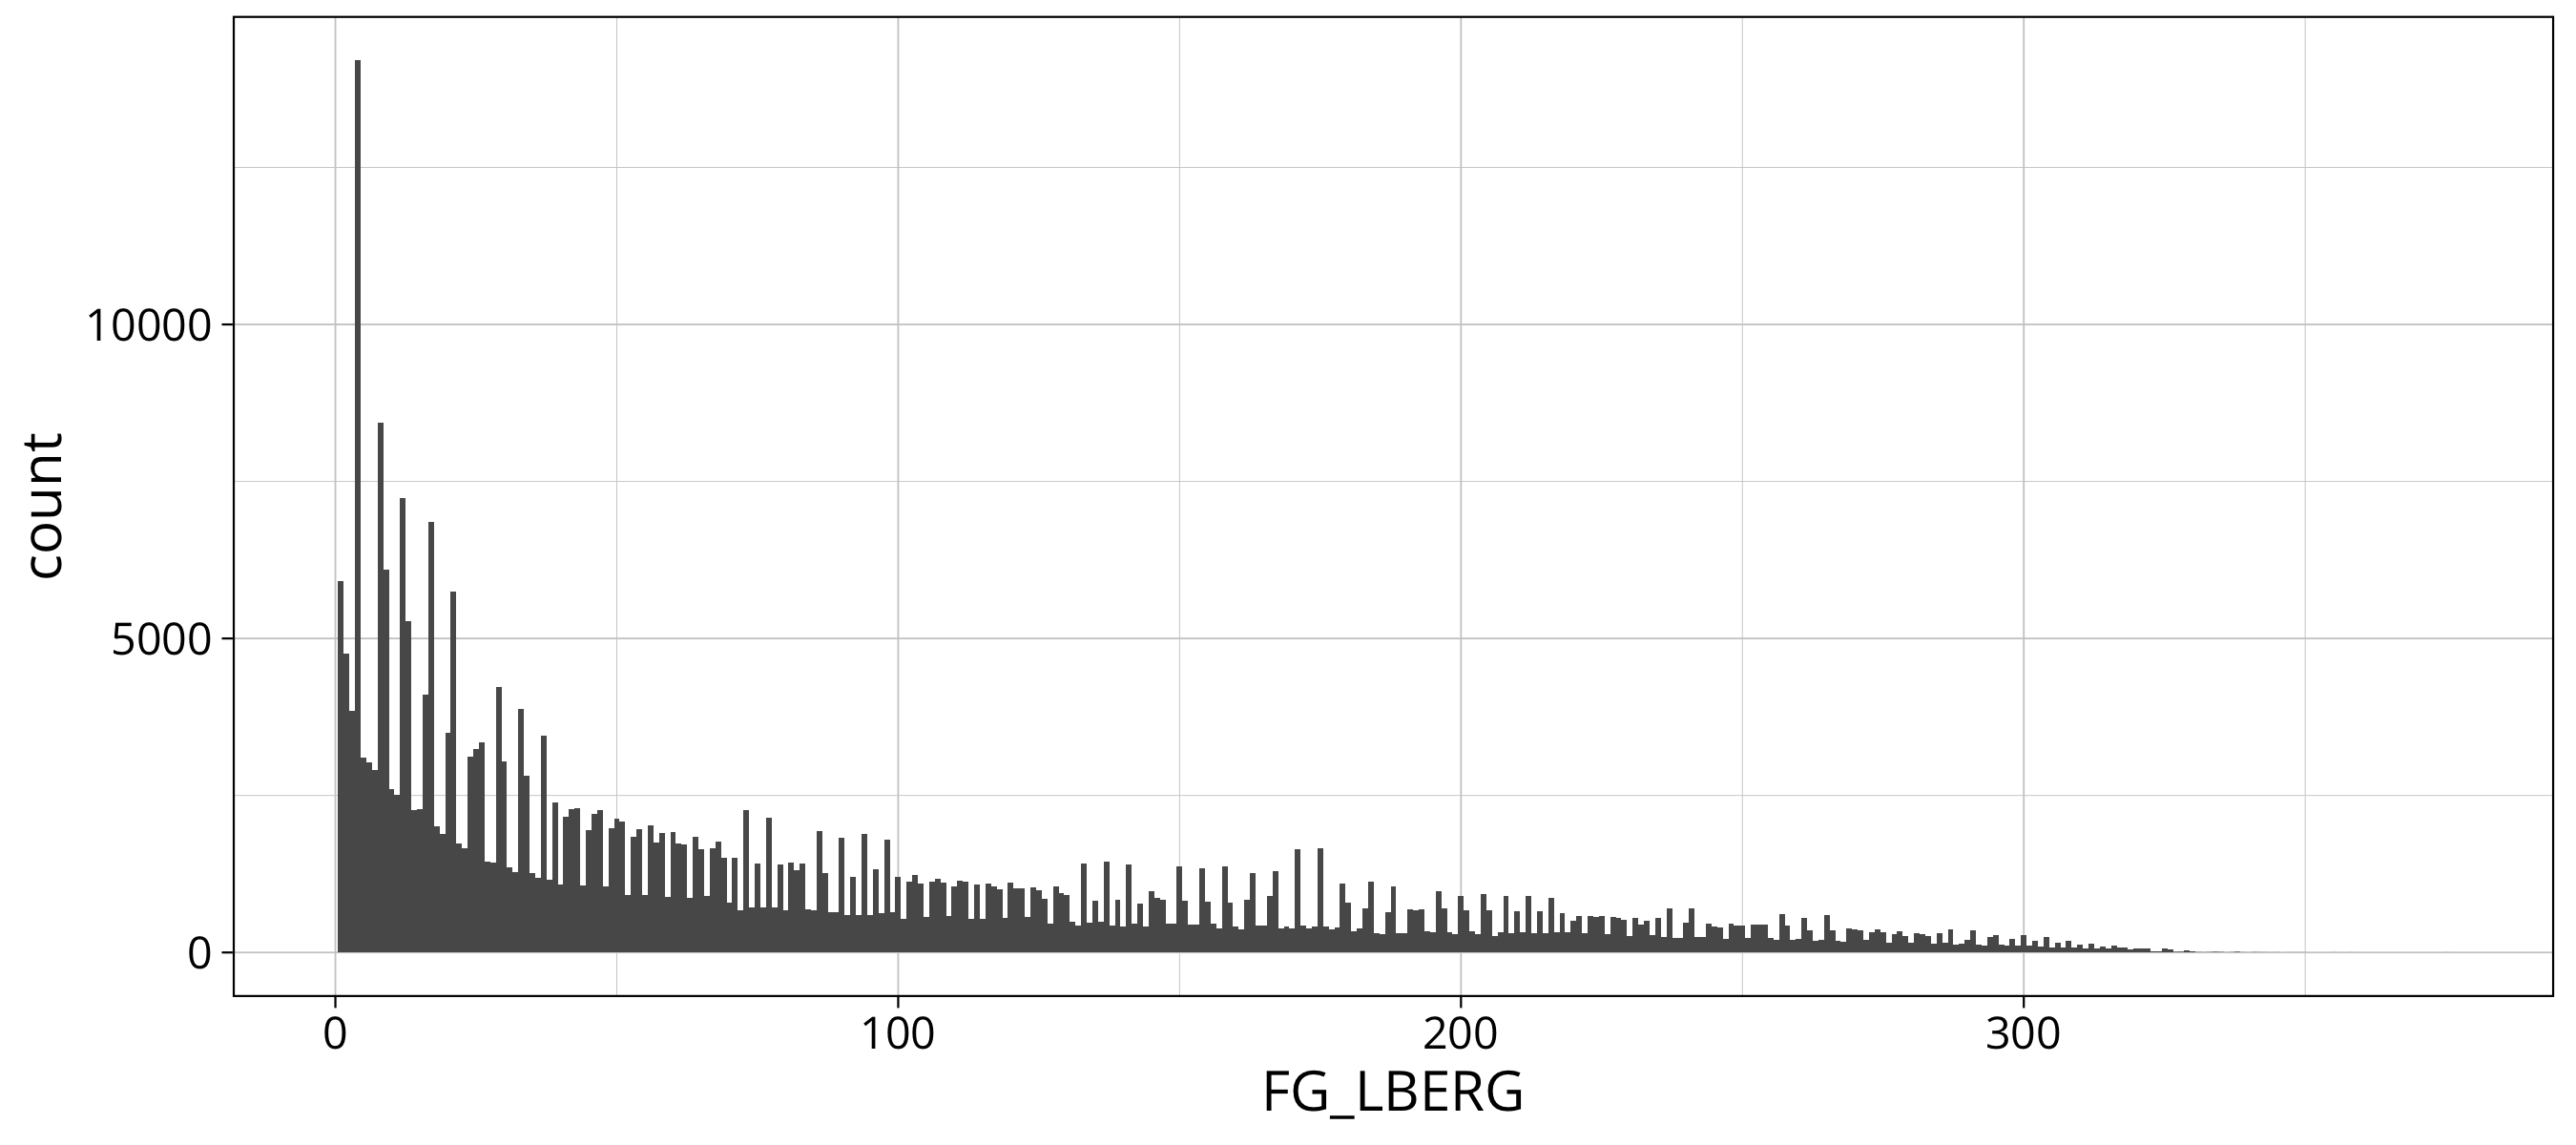 plot of chunk solar: plot histogram